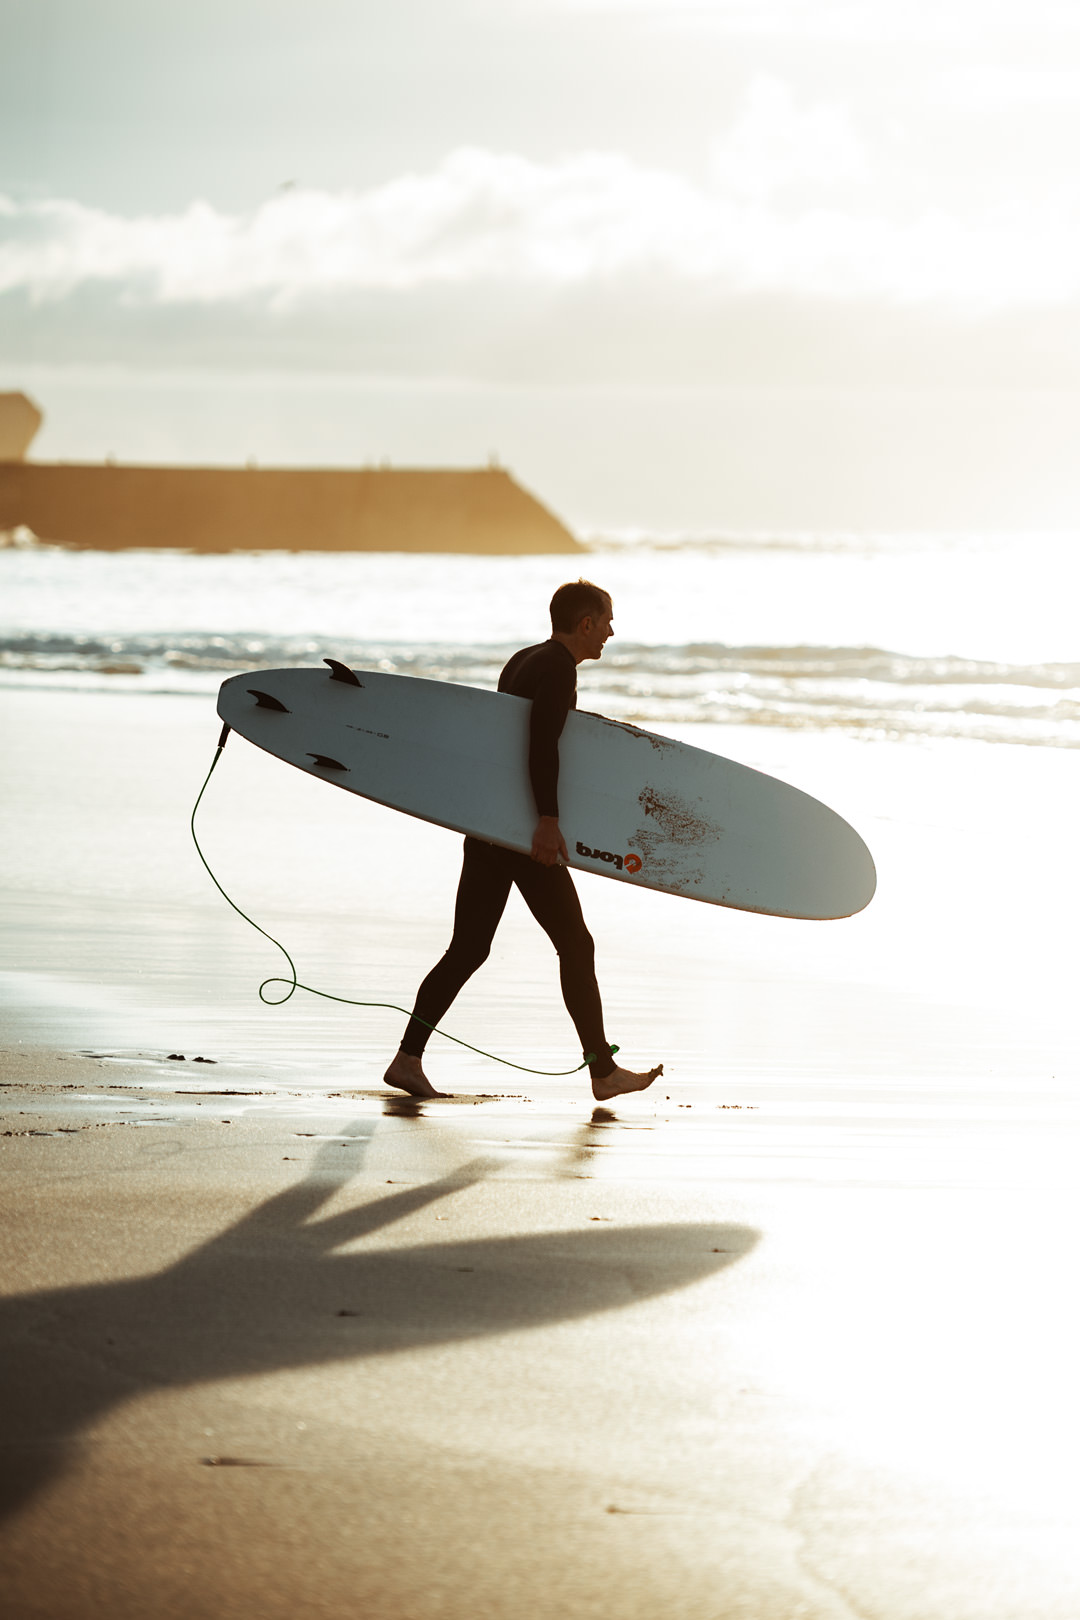 man carrying surfboard towards ocean on flat sandy beach during sunset